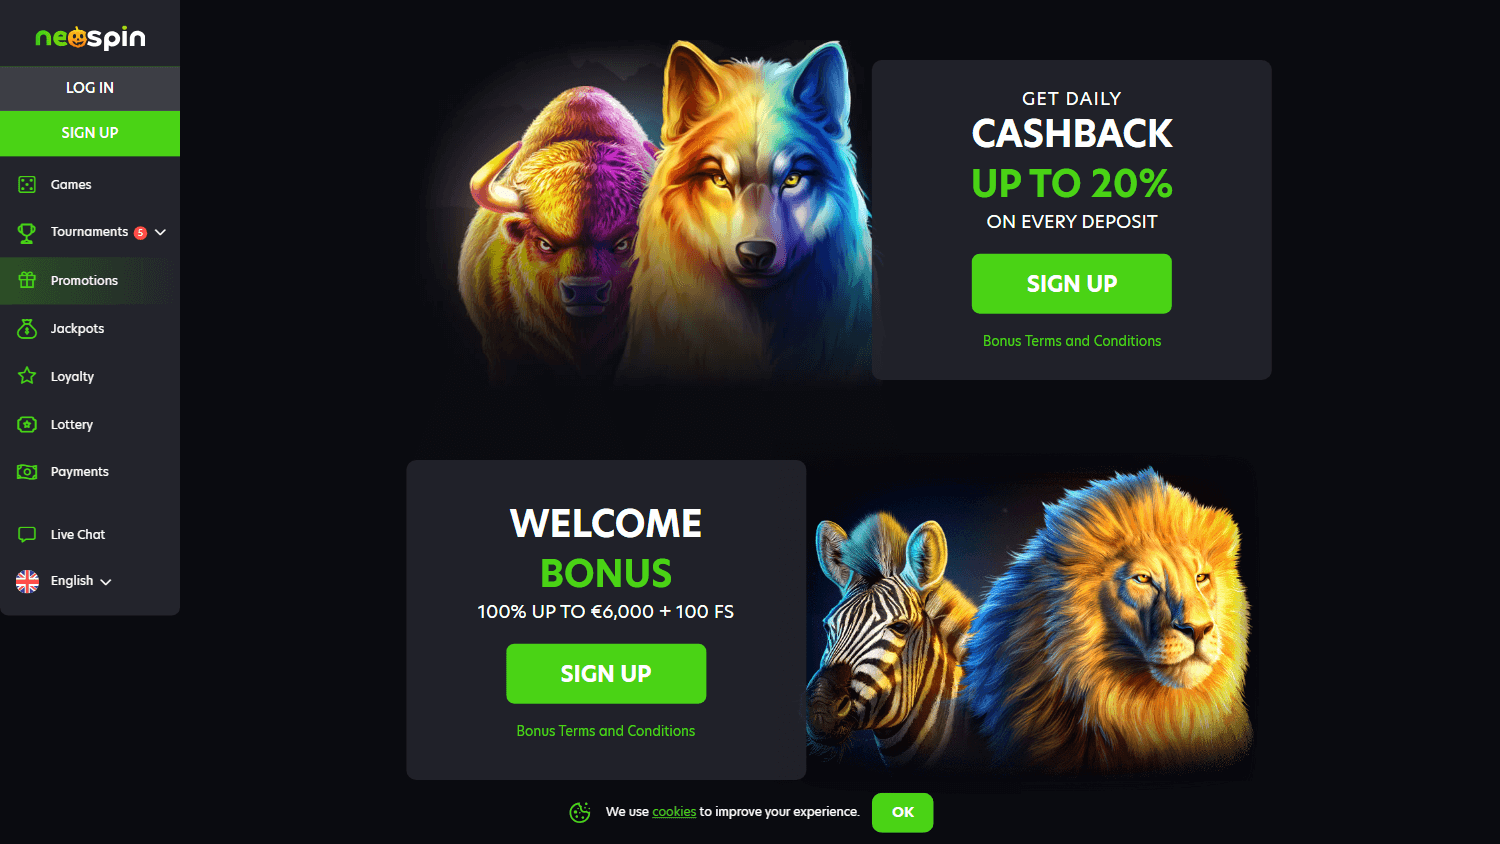 neospin_casino_promotions_desktop